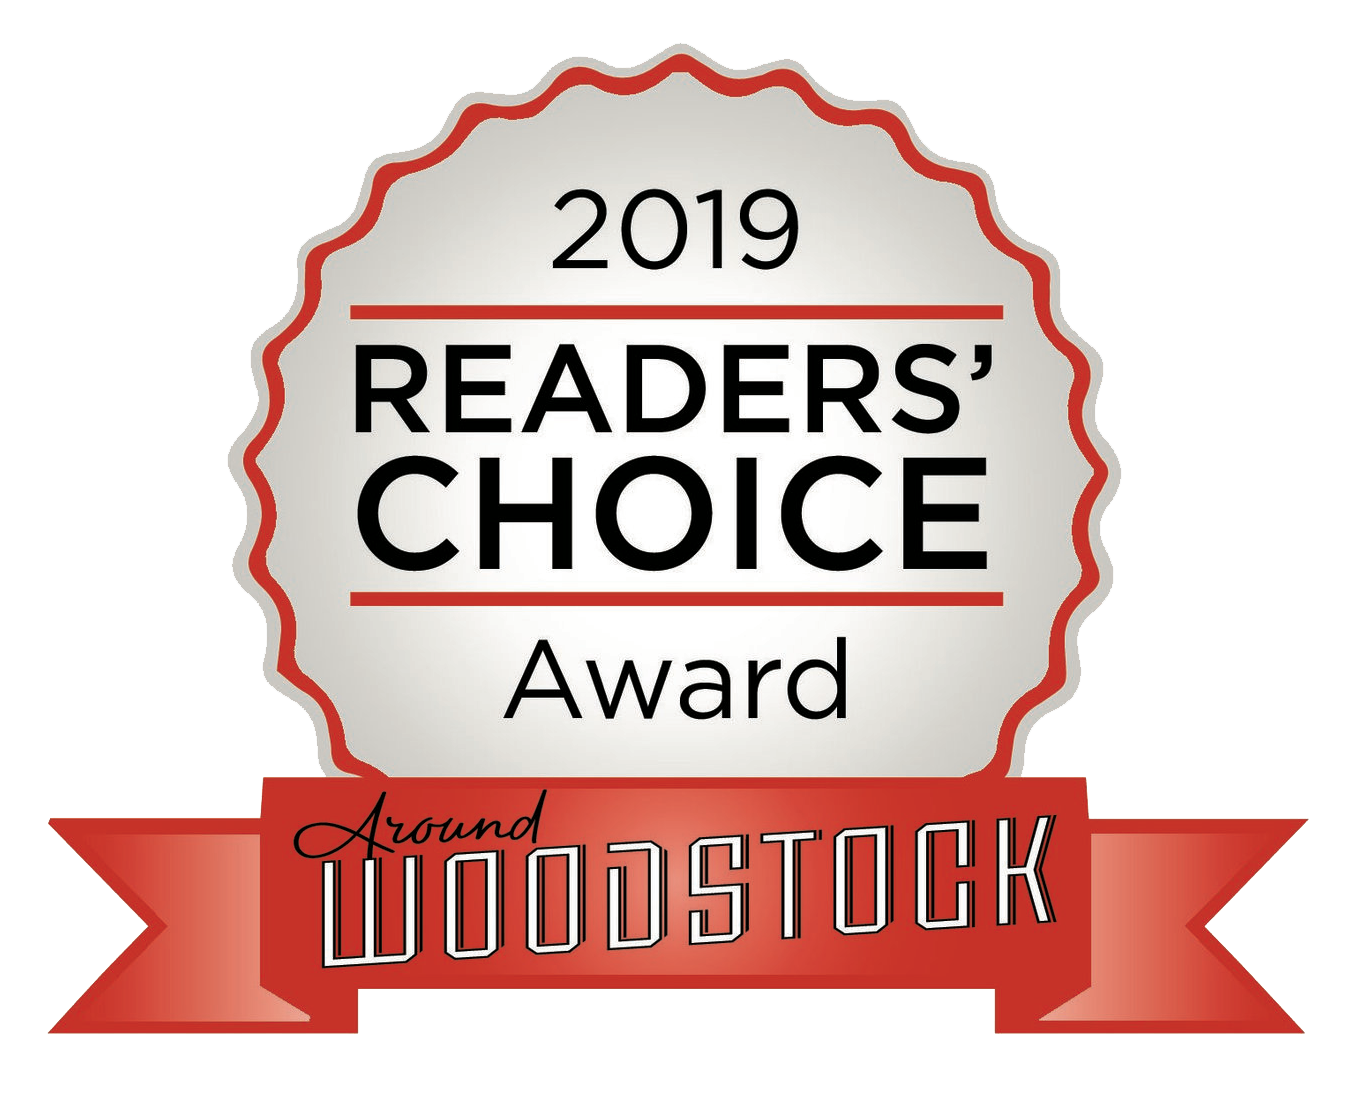 Reader's choice award 2019 logo